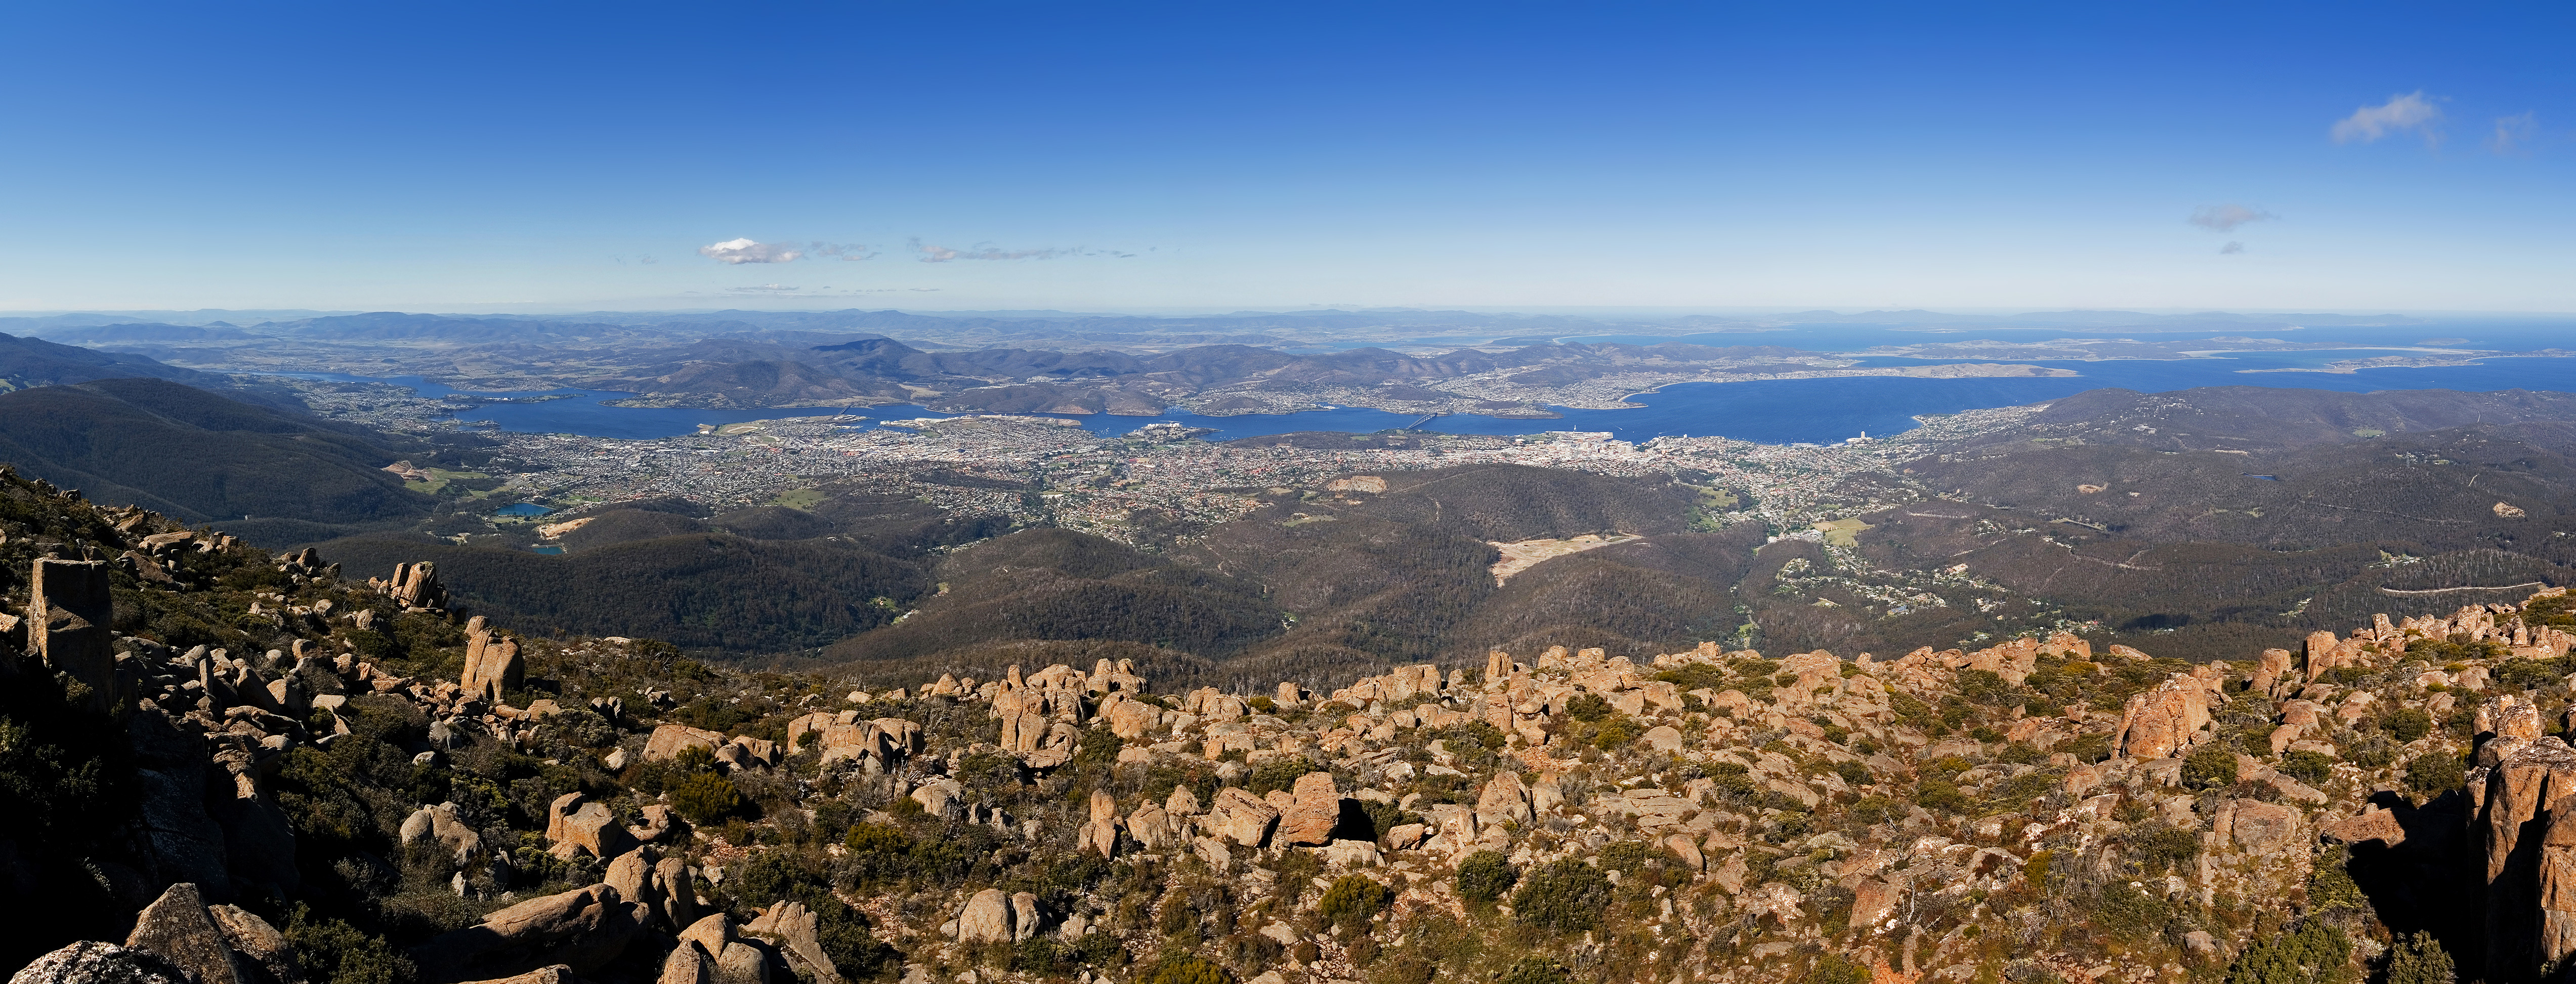 Hobart as seen from Mount Wellington. Photo taken on November 26, 2008.